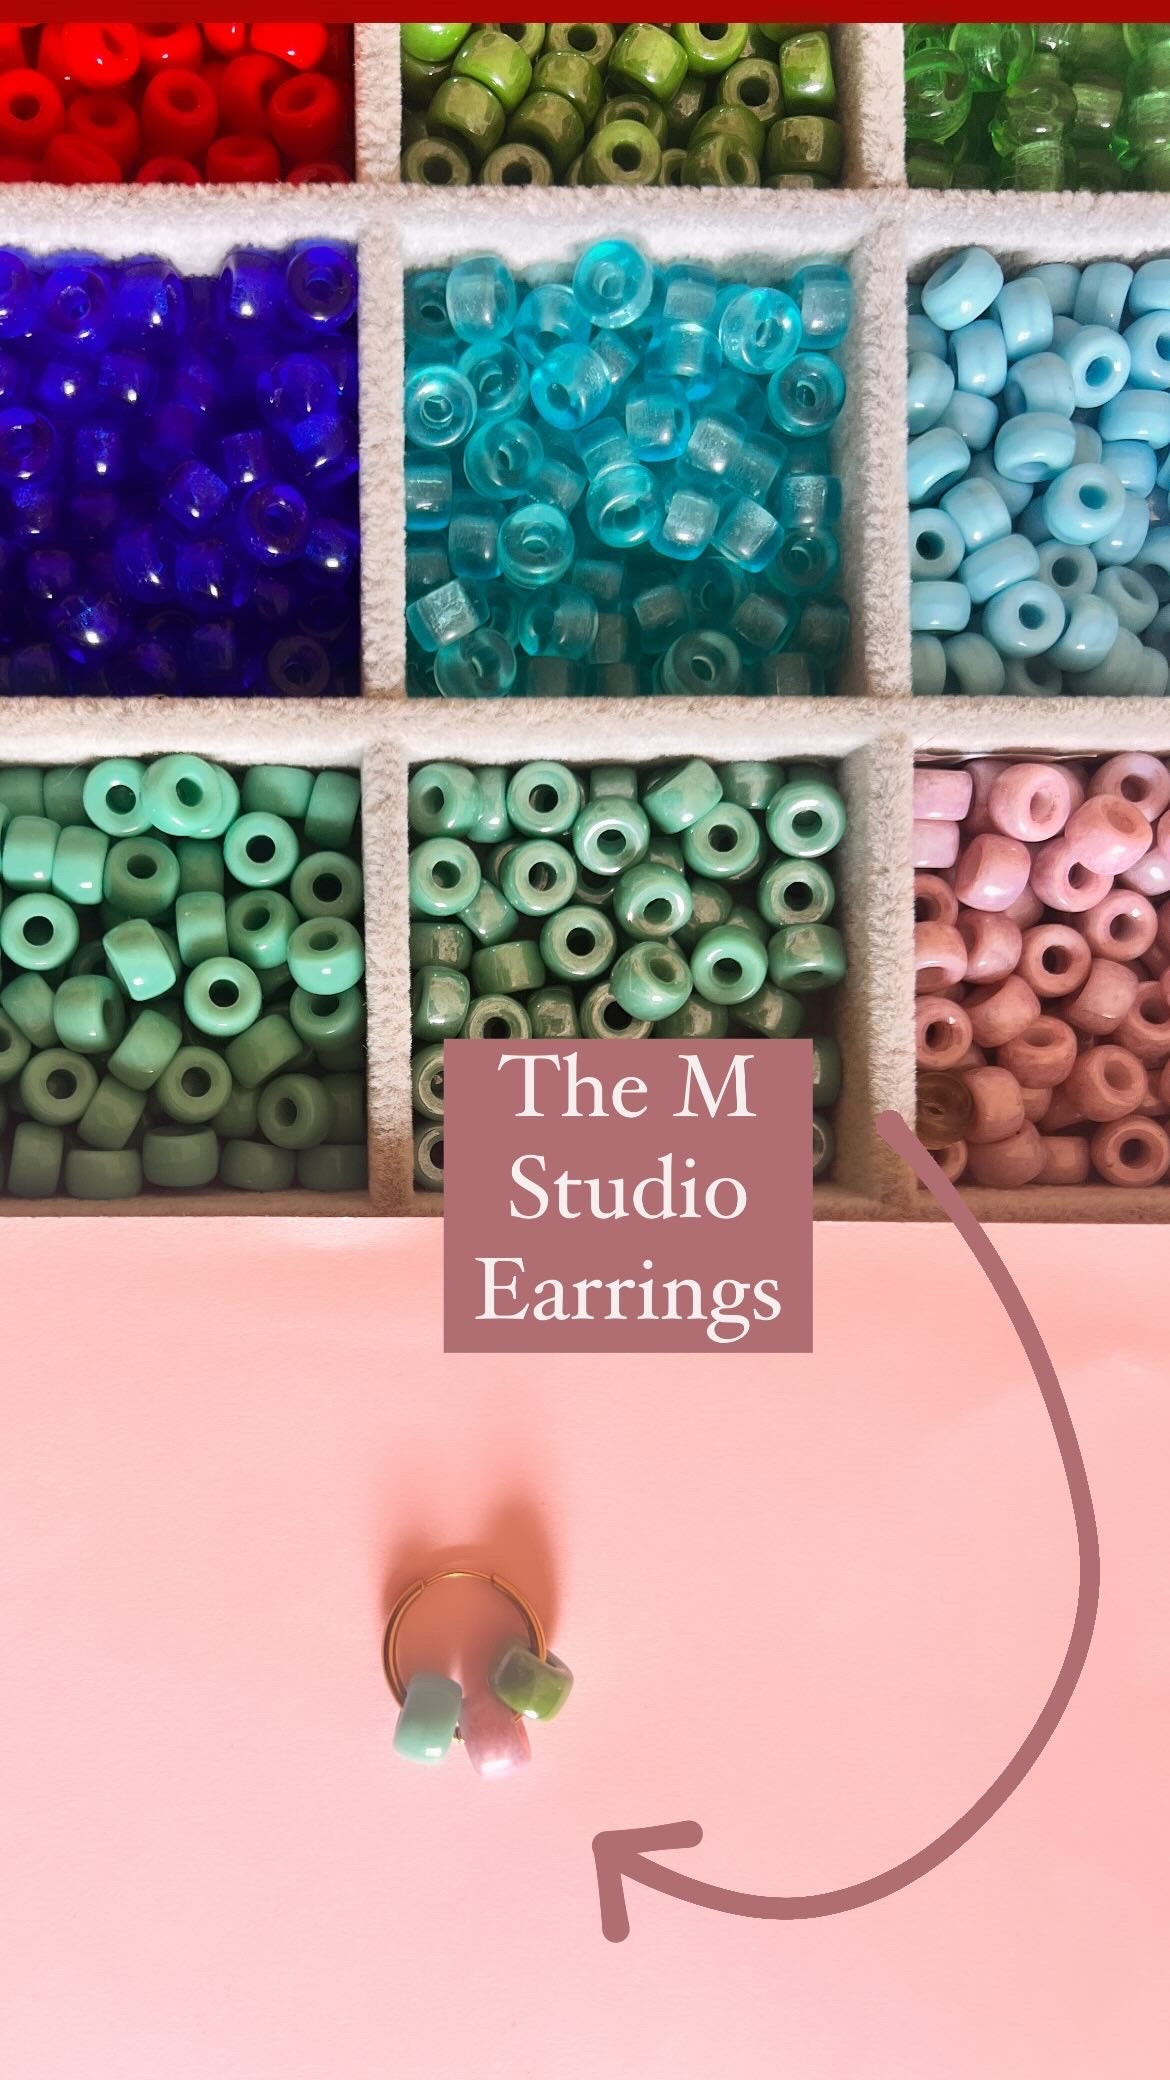 The M Studio Earrings